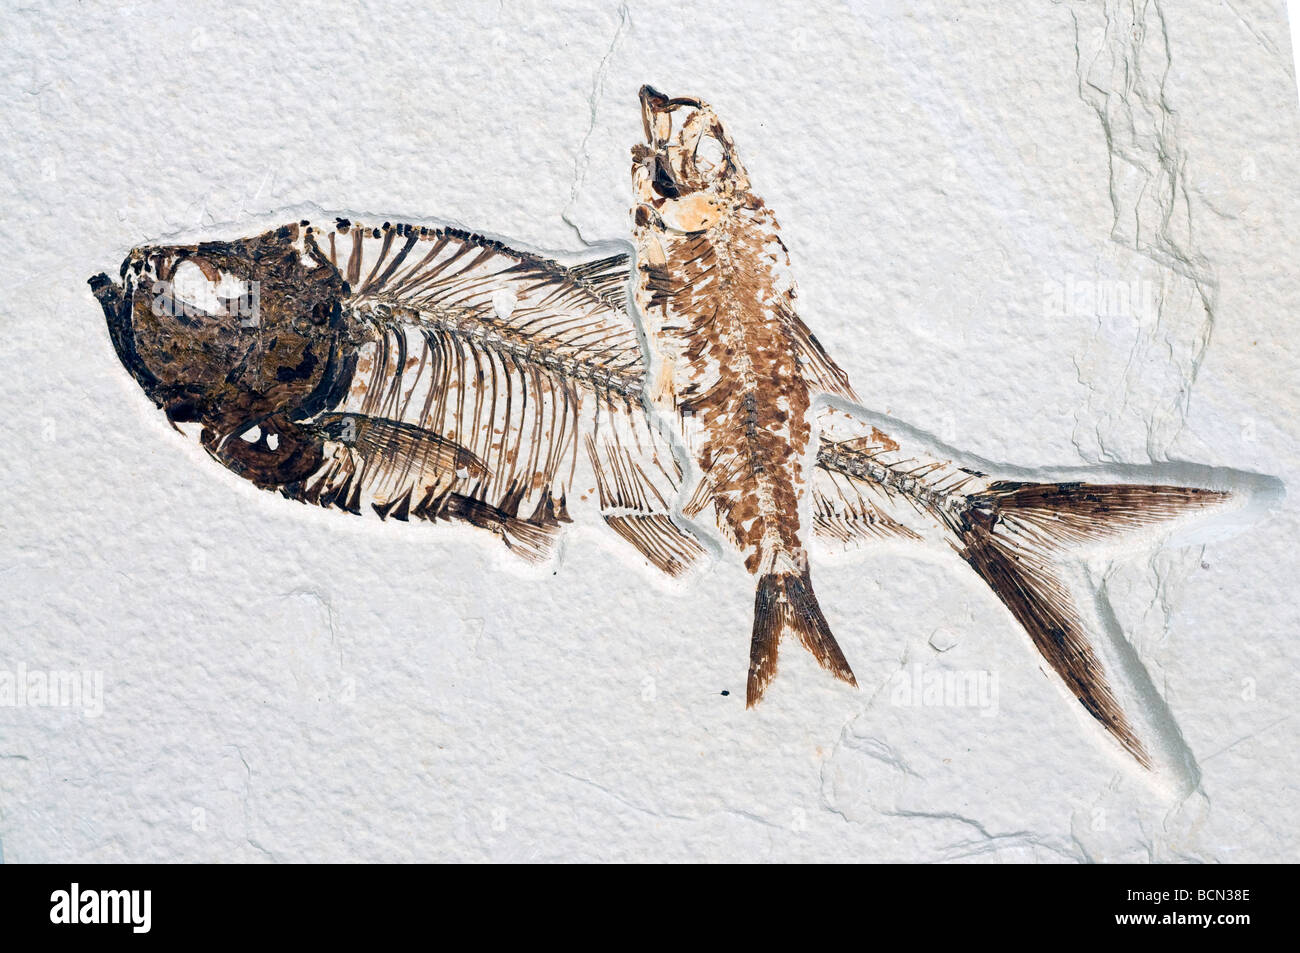 Fish fossils Diplomystus dentatus, the larger fish and Knightia eocaena Green River Formation, Wyoming USA Stock Photo